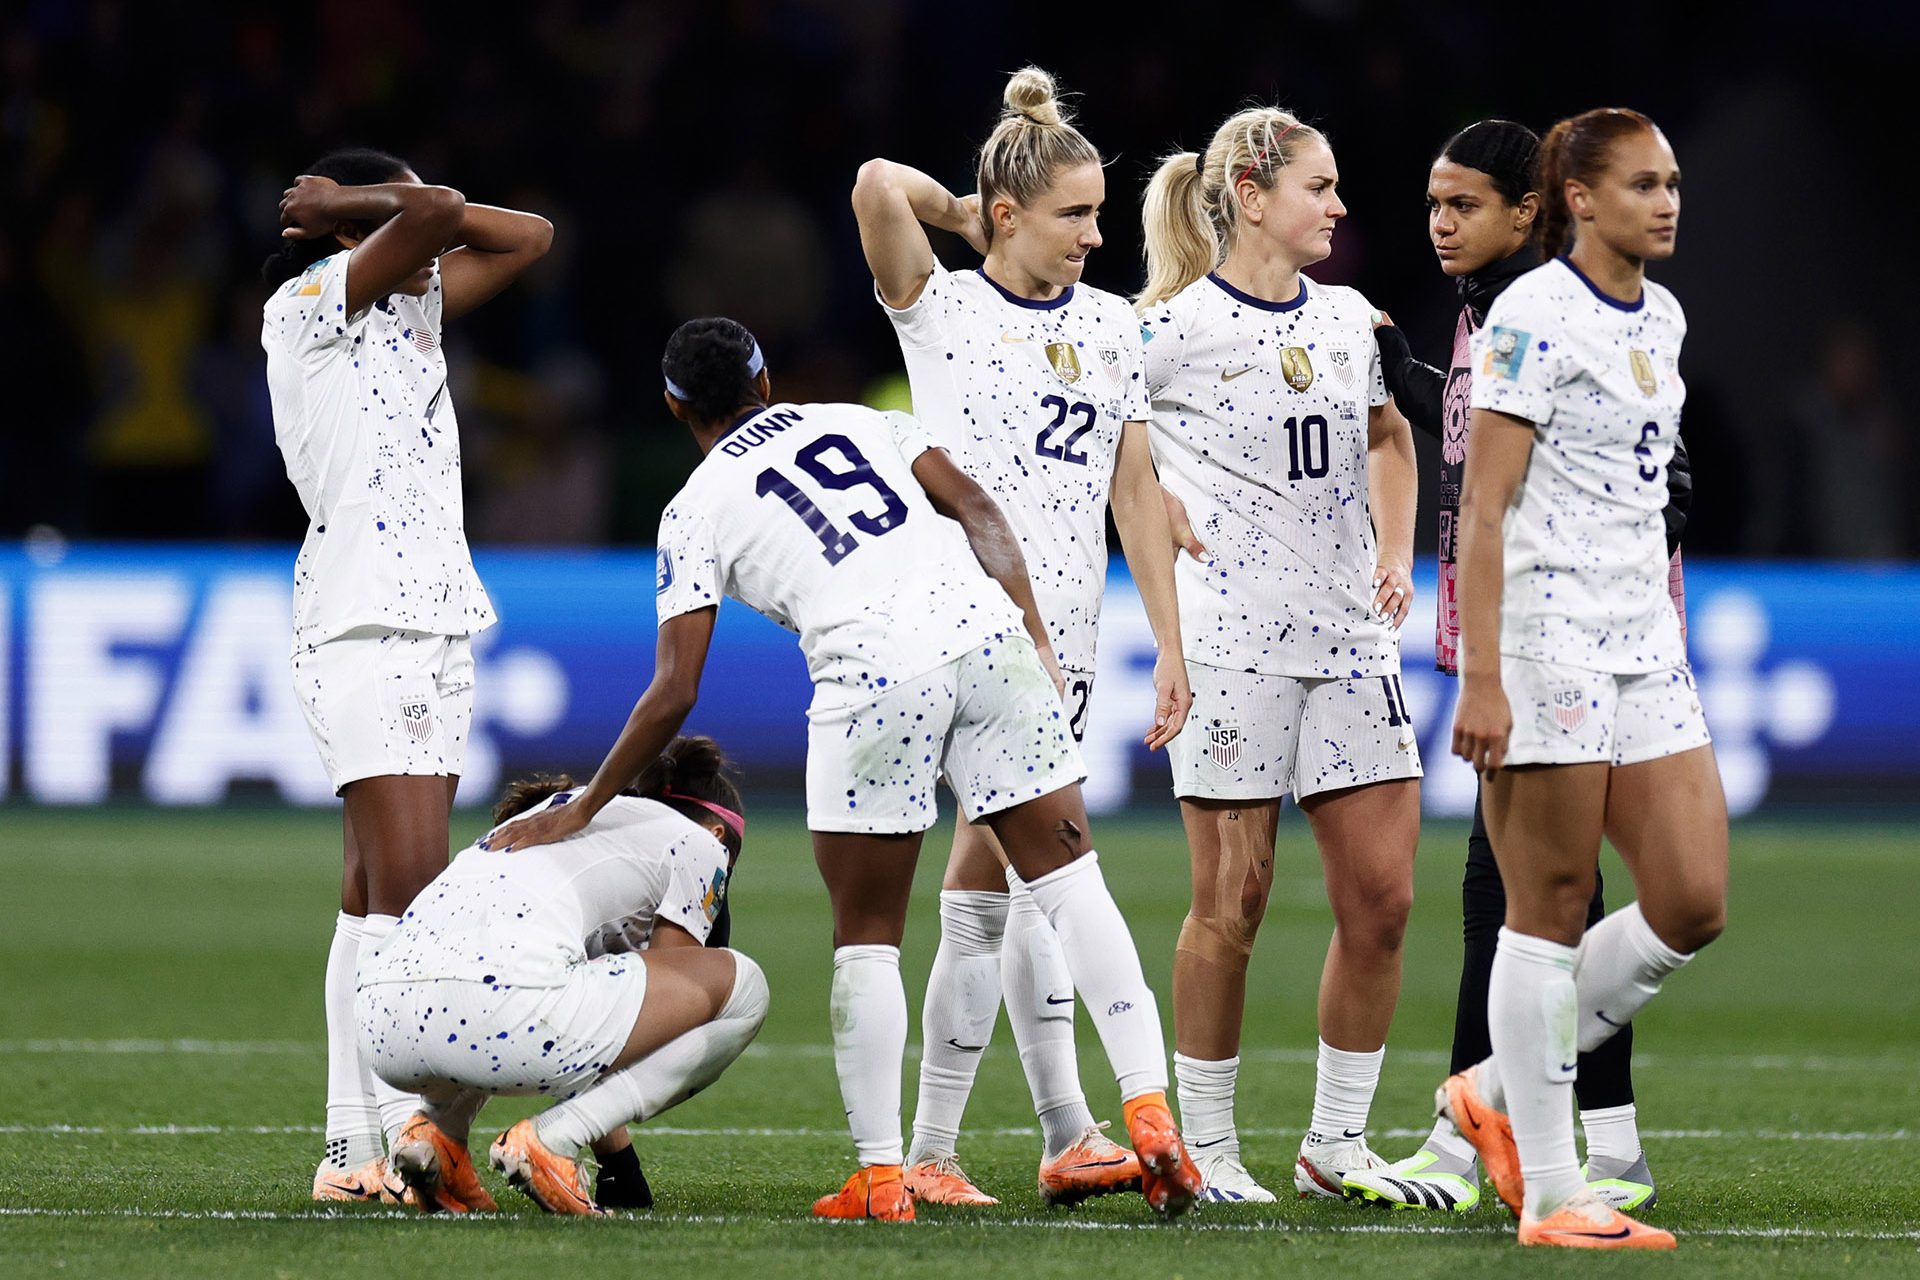 Football: US Women's National Team 